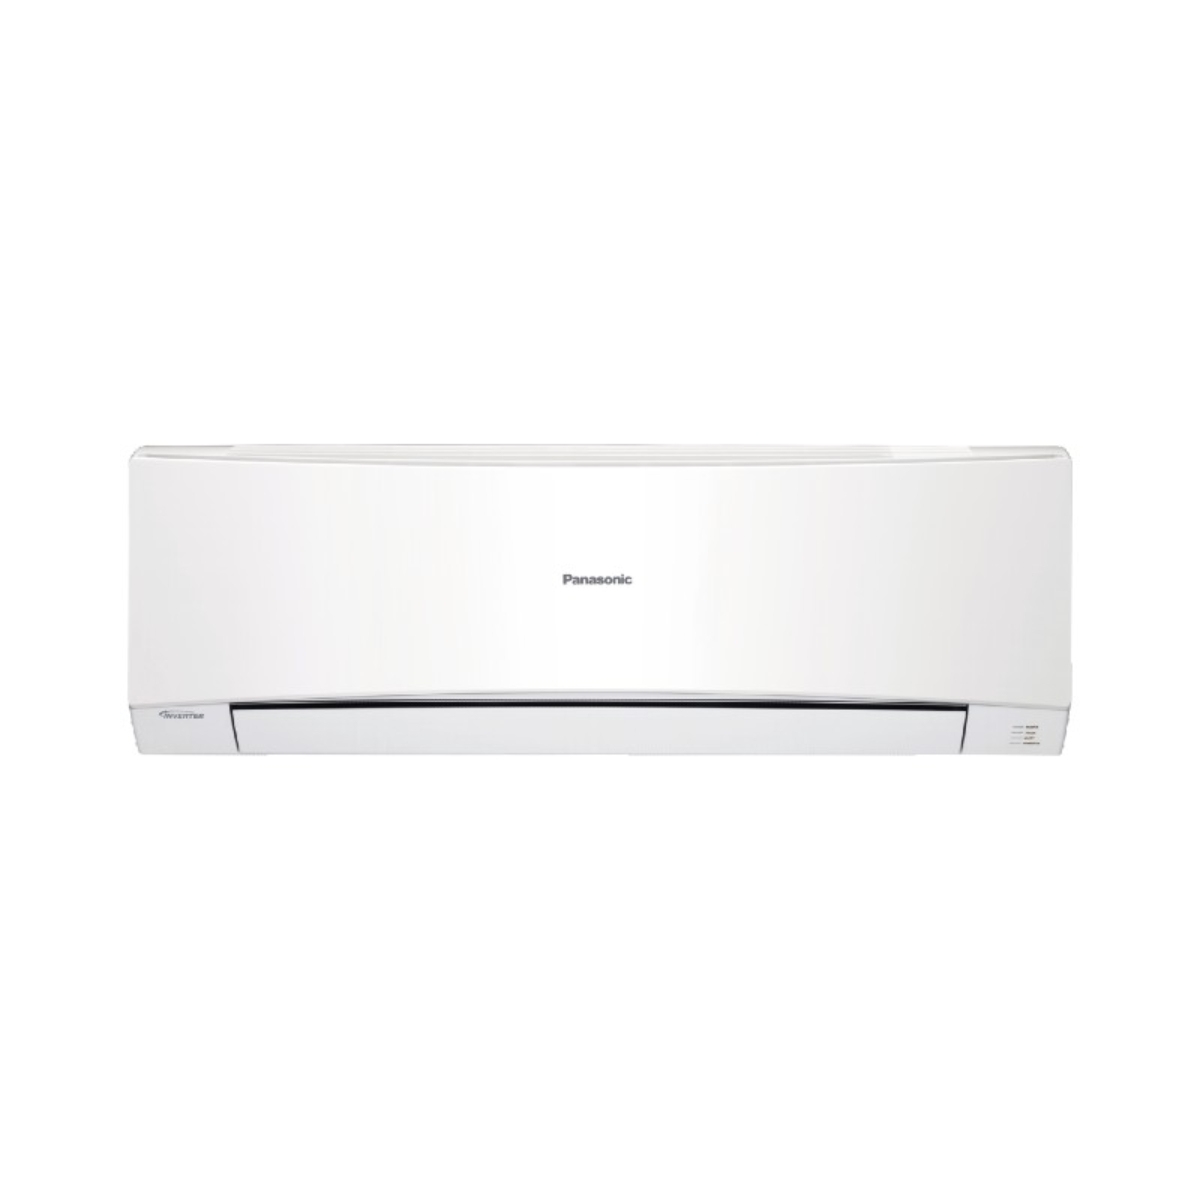 Panasonic Multi-Zone Air Conditioners - Nordics